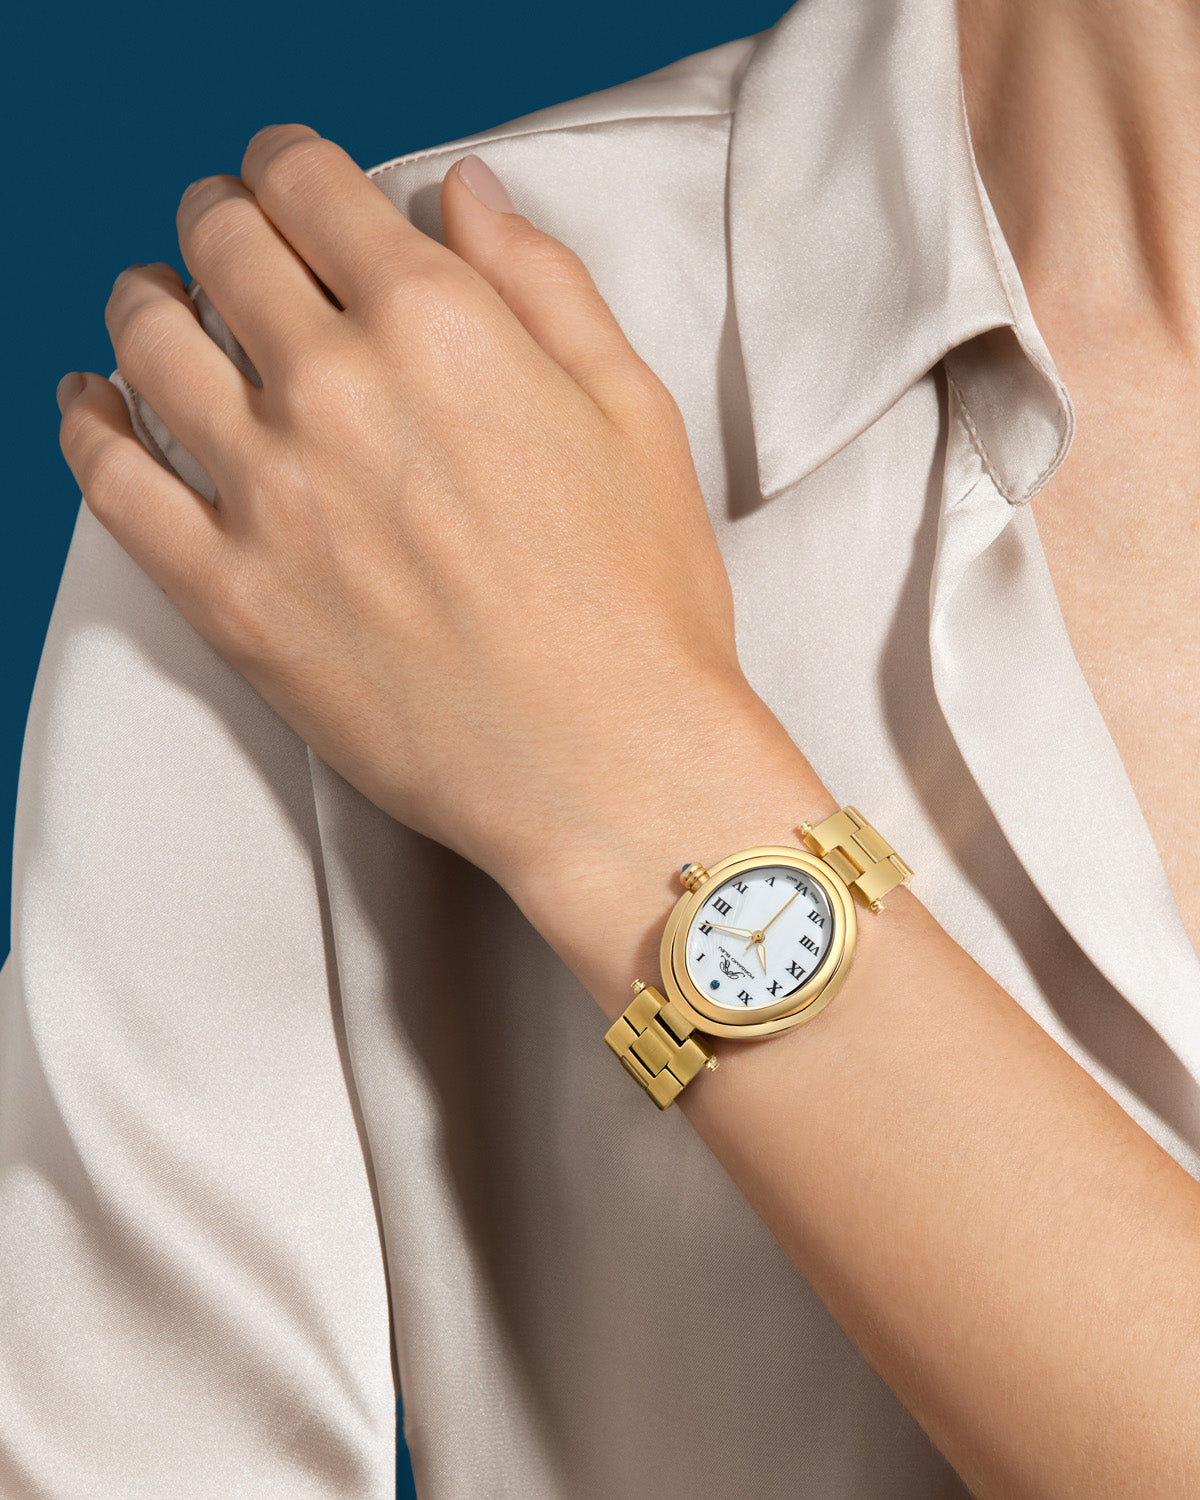 Porsamo Bleu South Sea Oval Luxury Women's Stainless Steel Watch, Champagne 105BSSO